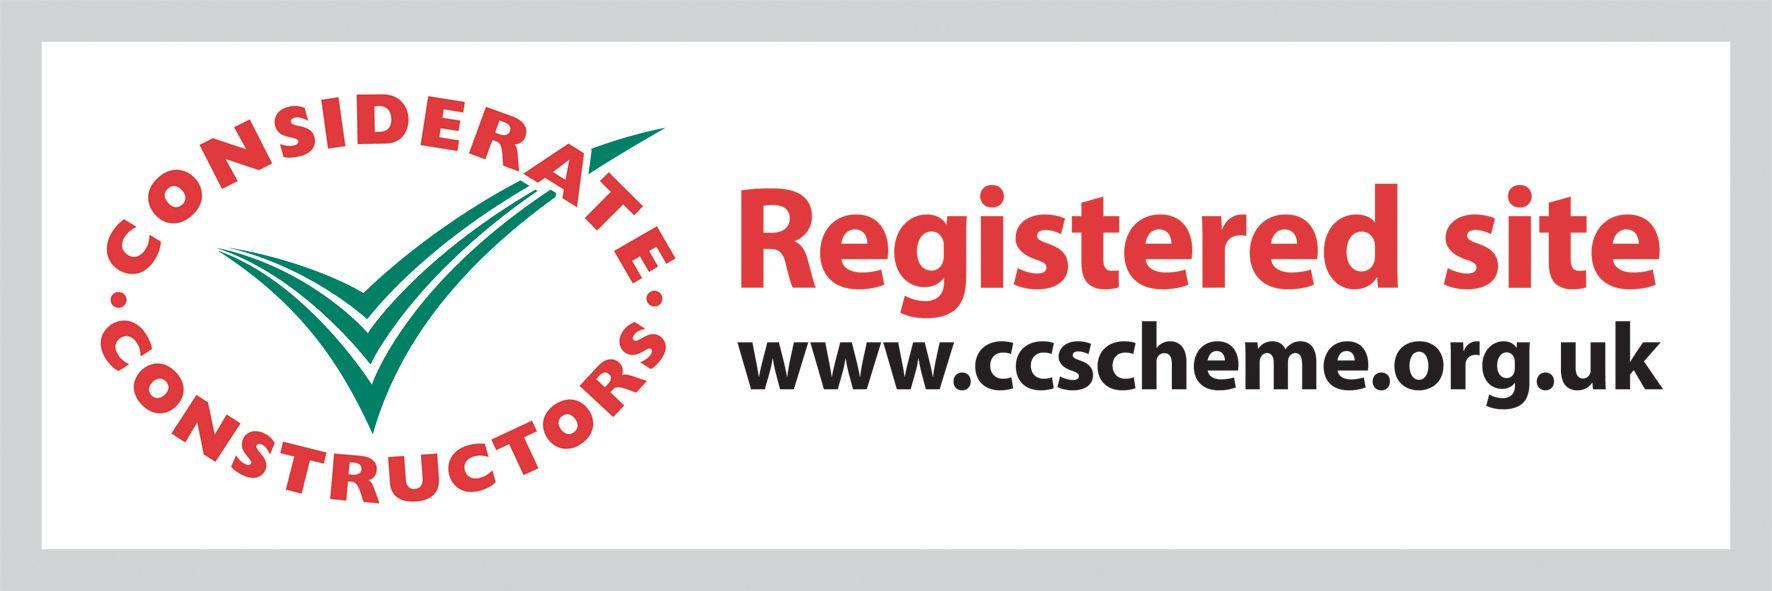 Registered Logo - Registered site logo | ccscheme